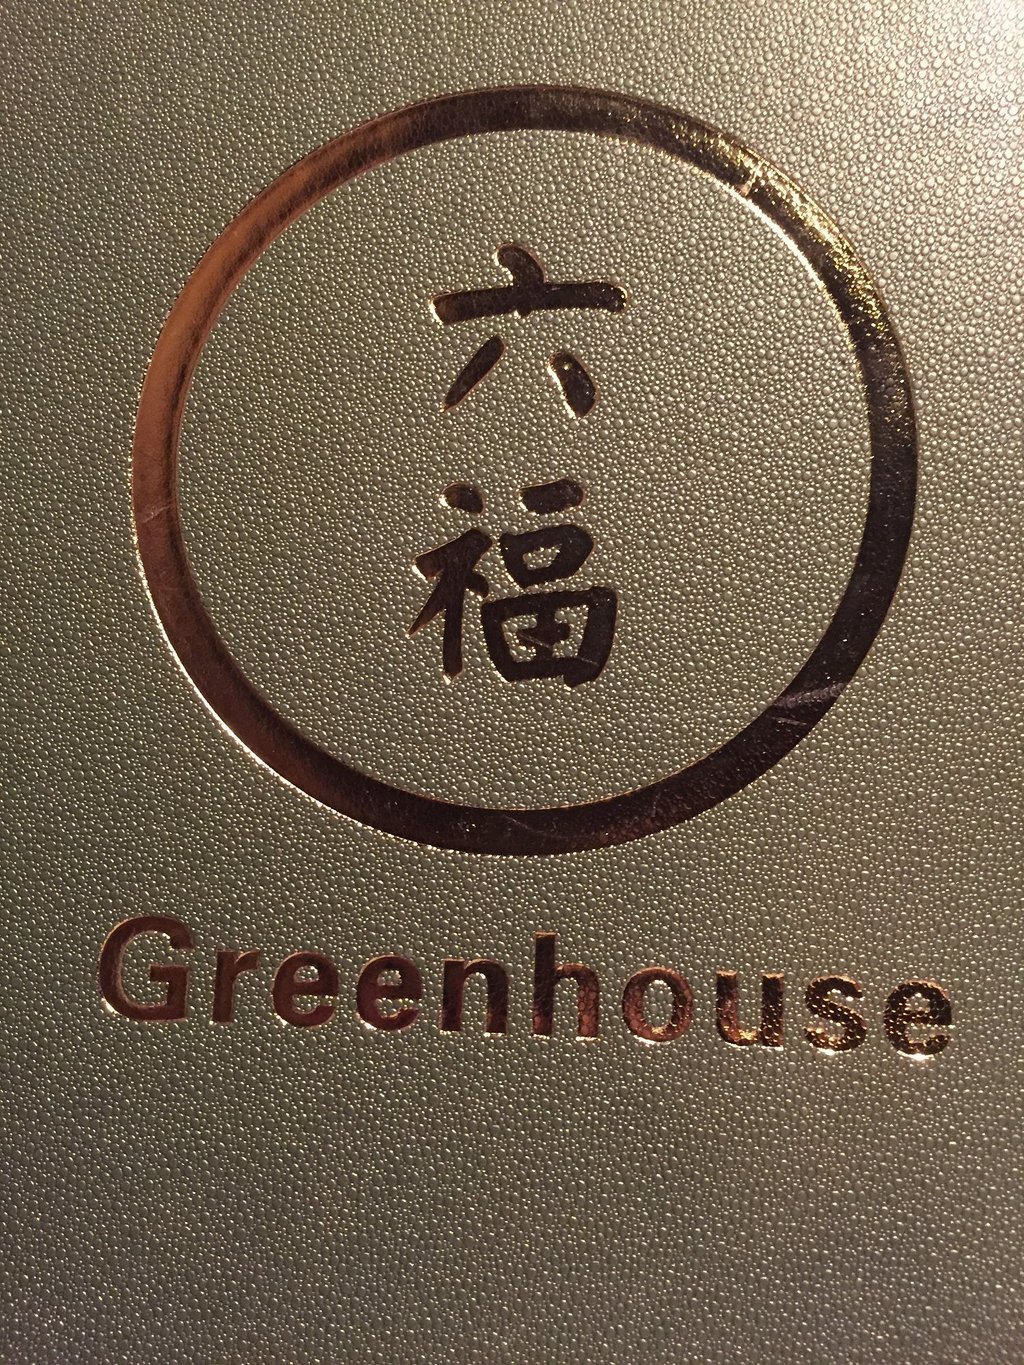 Green House Chinese Restaurant